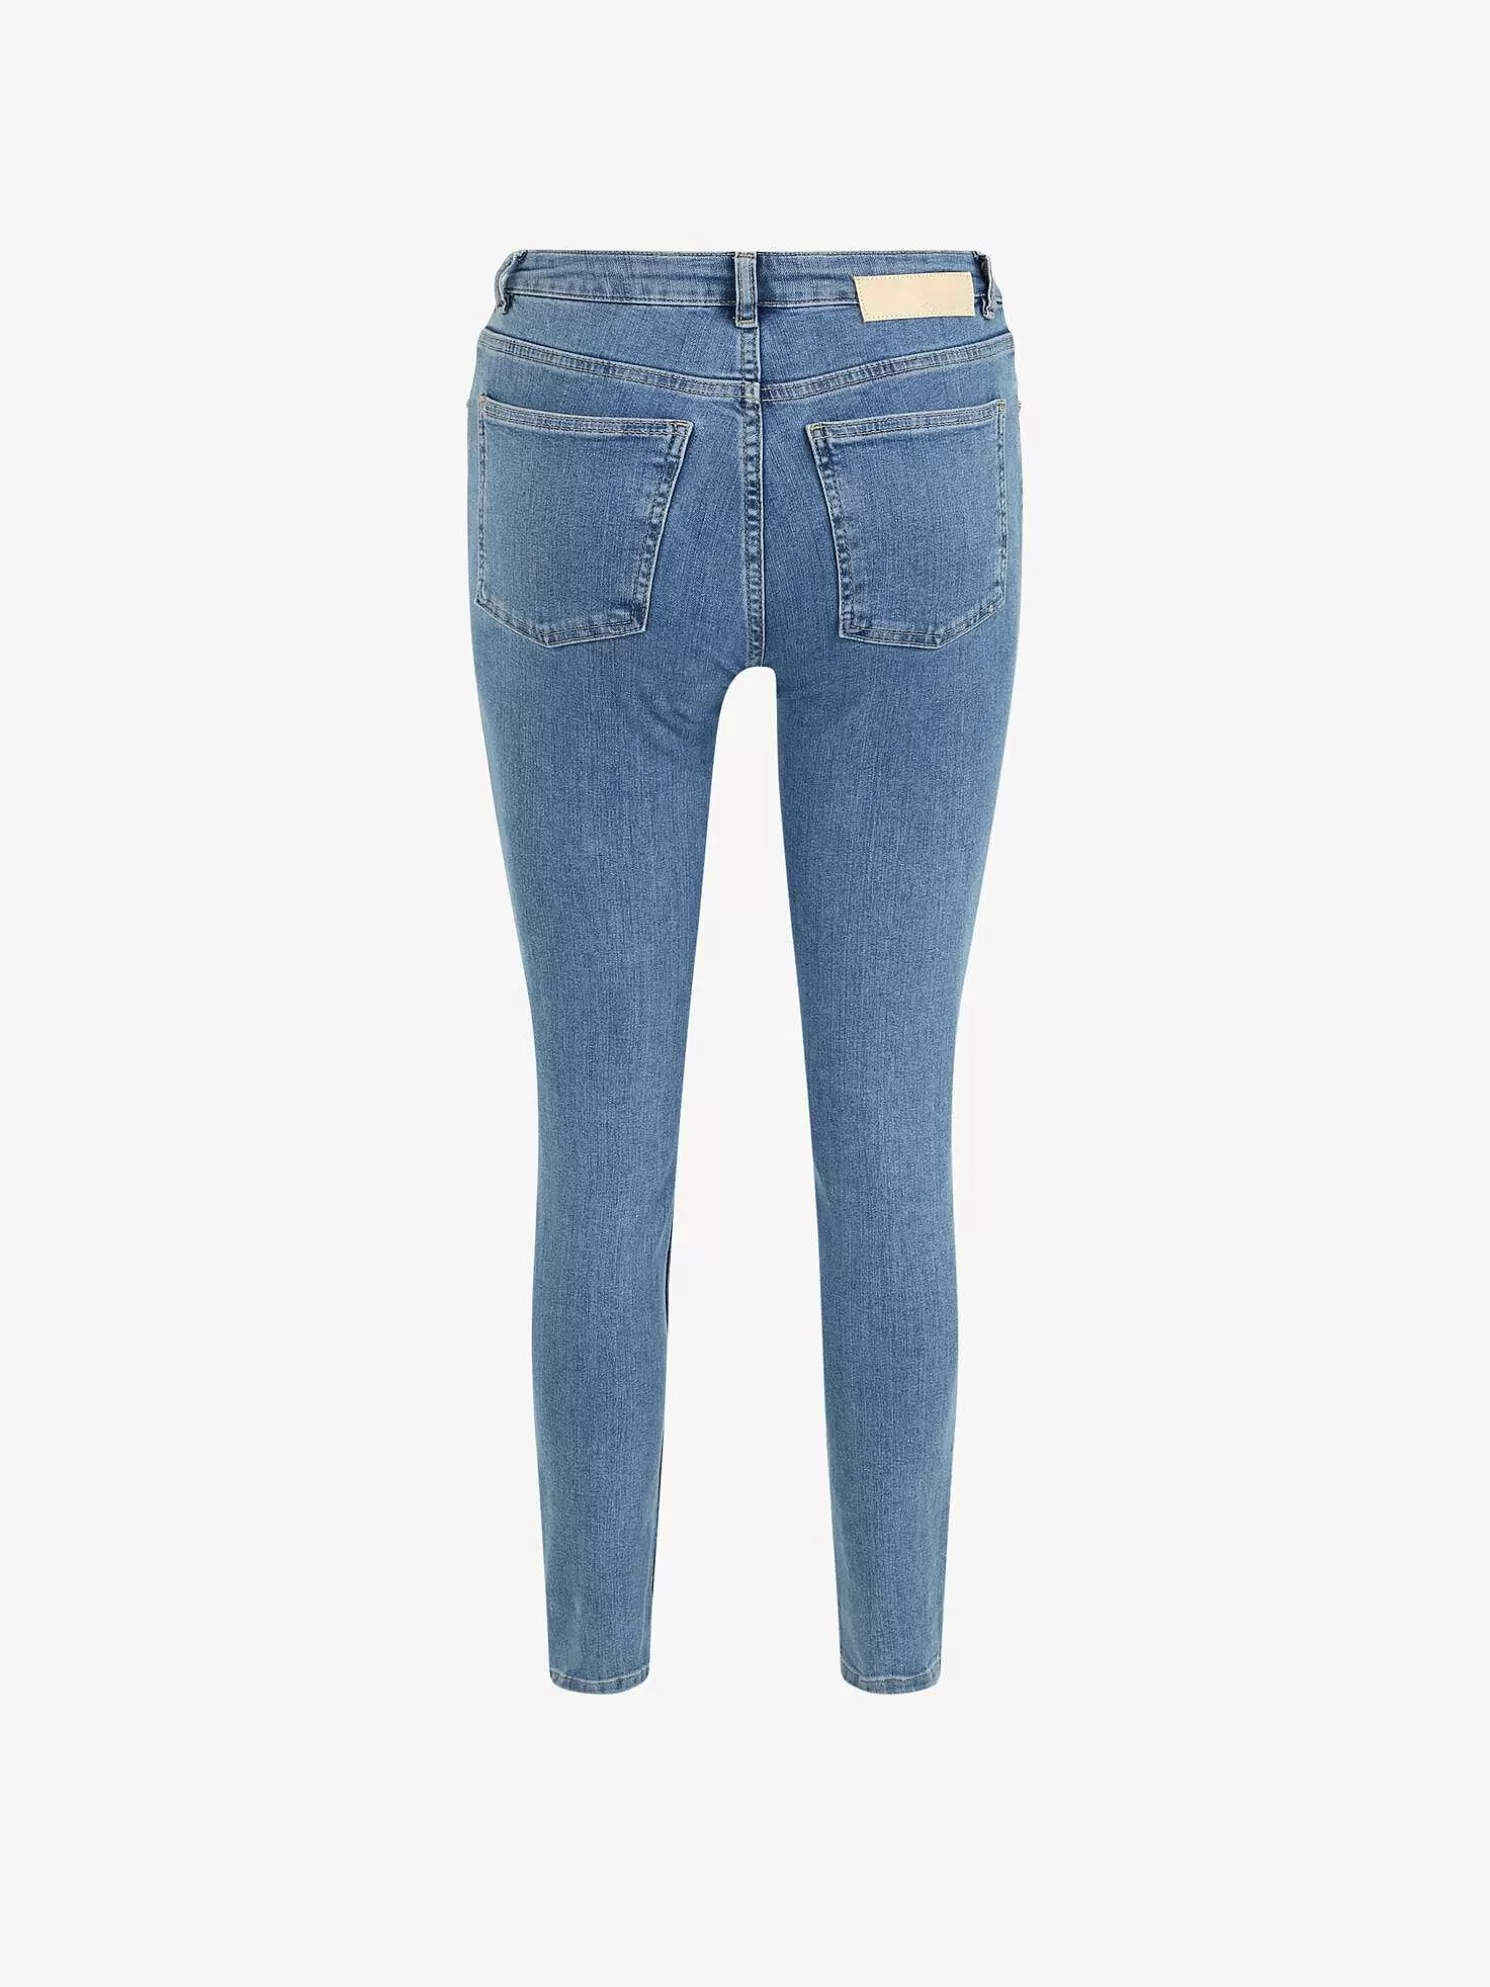 Jeans - Blau*Tamaris Fashion